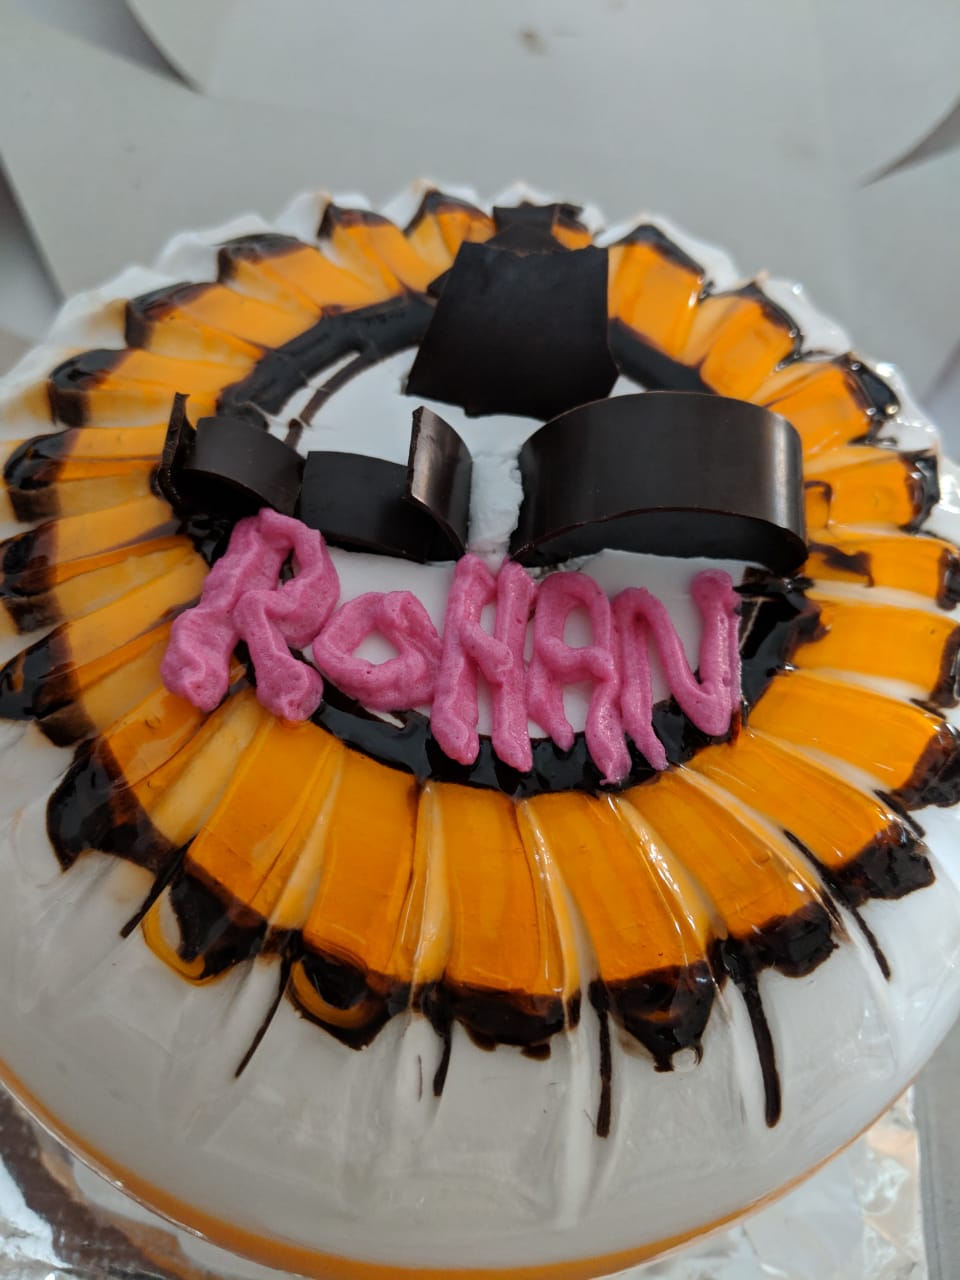 Chocolate Happy Birthday Cake for Rohan (GIF) — Download on Funimada.com